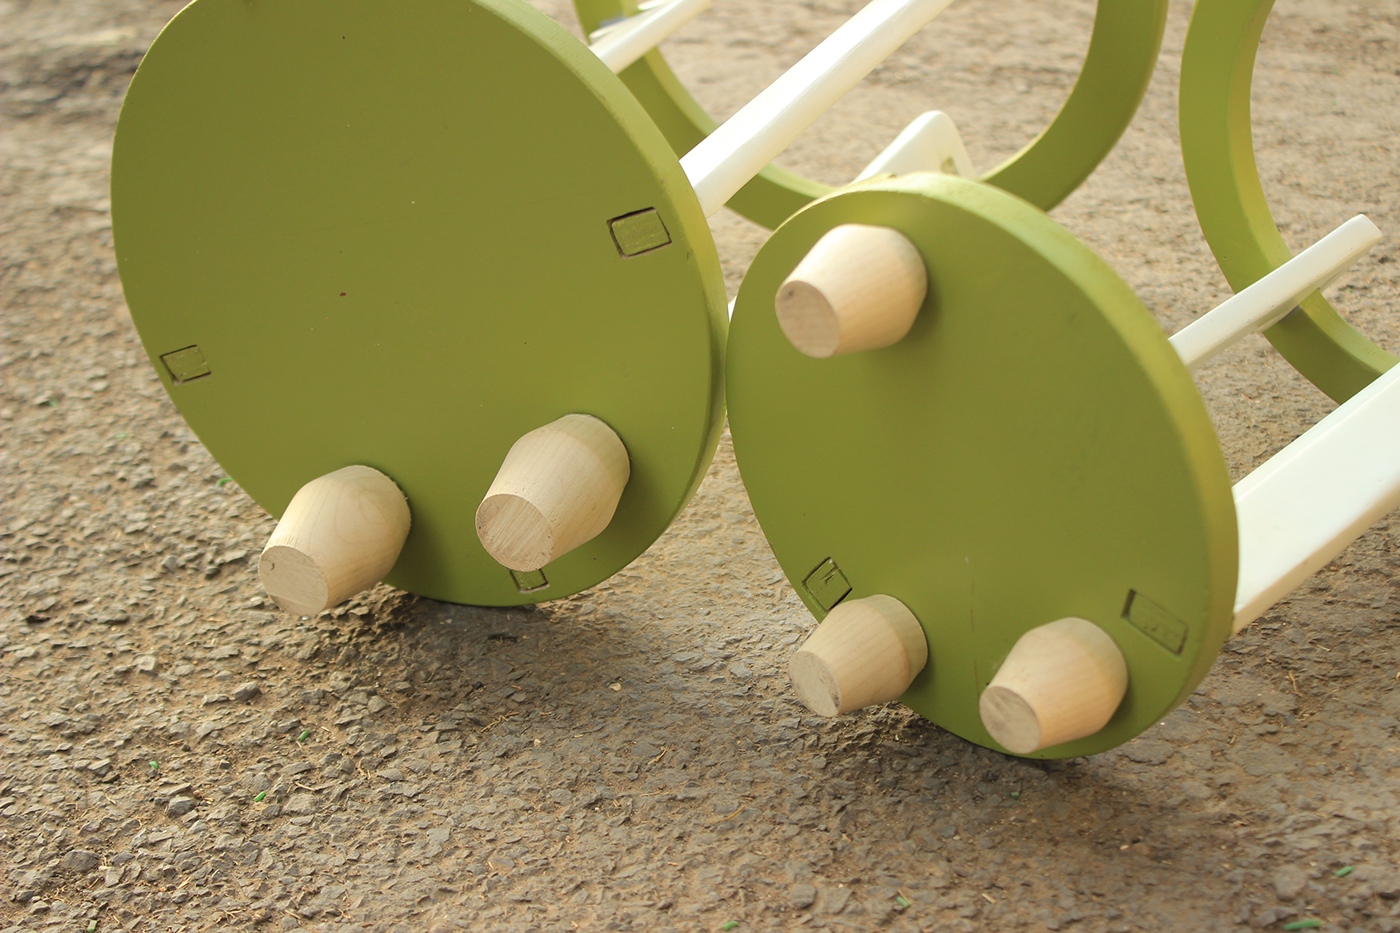 rubberwood storage seating furniture Collapsible green metal rods sheet plywood